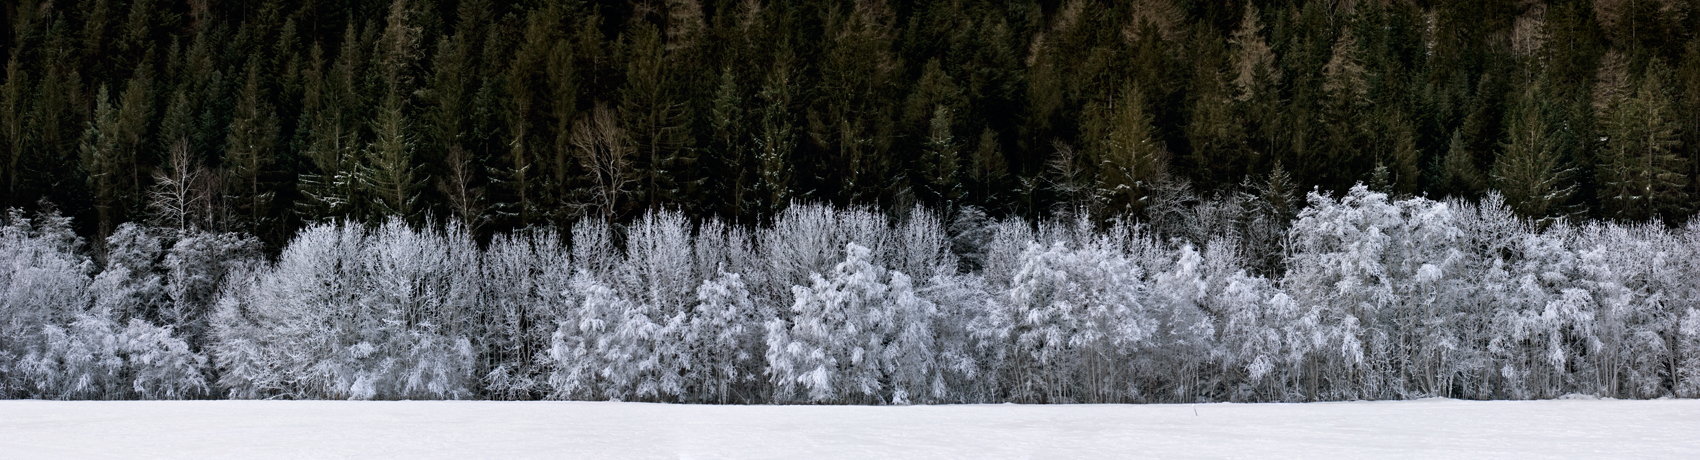 Jon Wyatt Photography - Snowy trees Tarentaise Valley, France